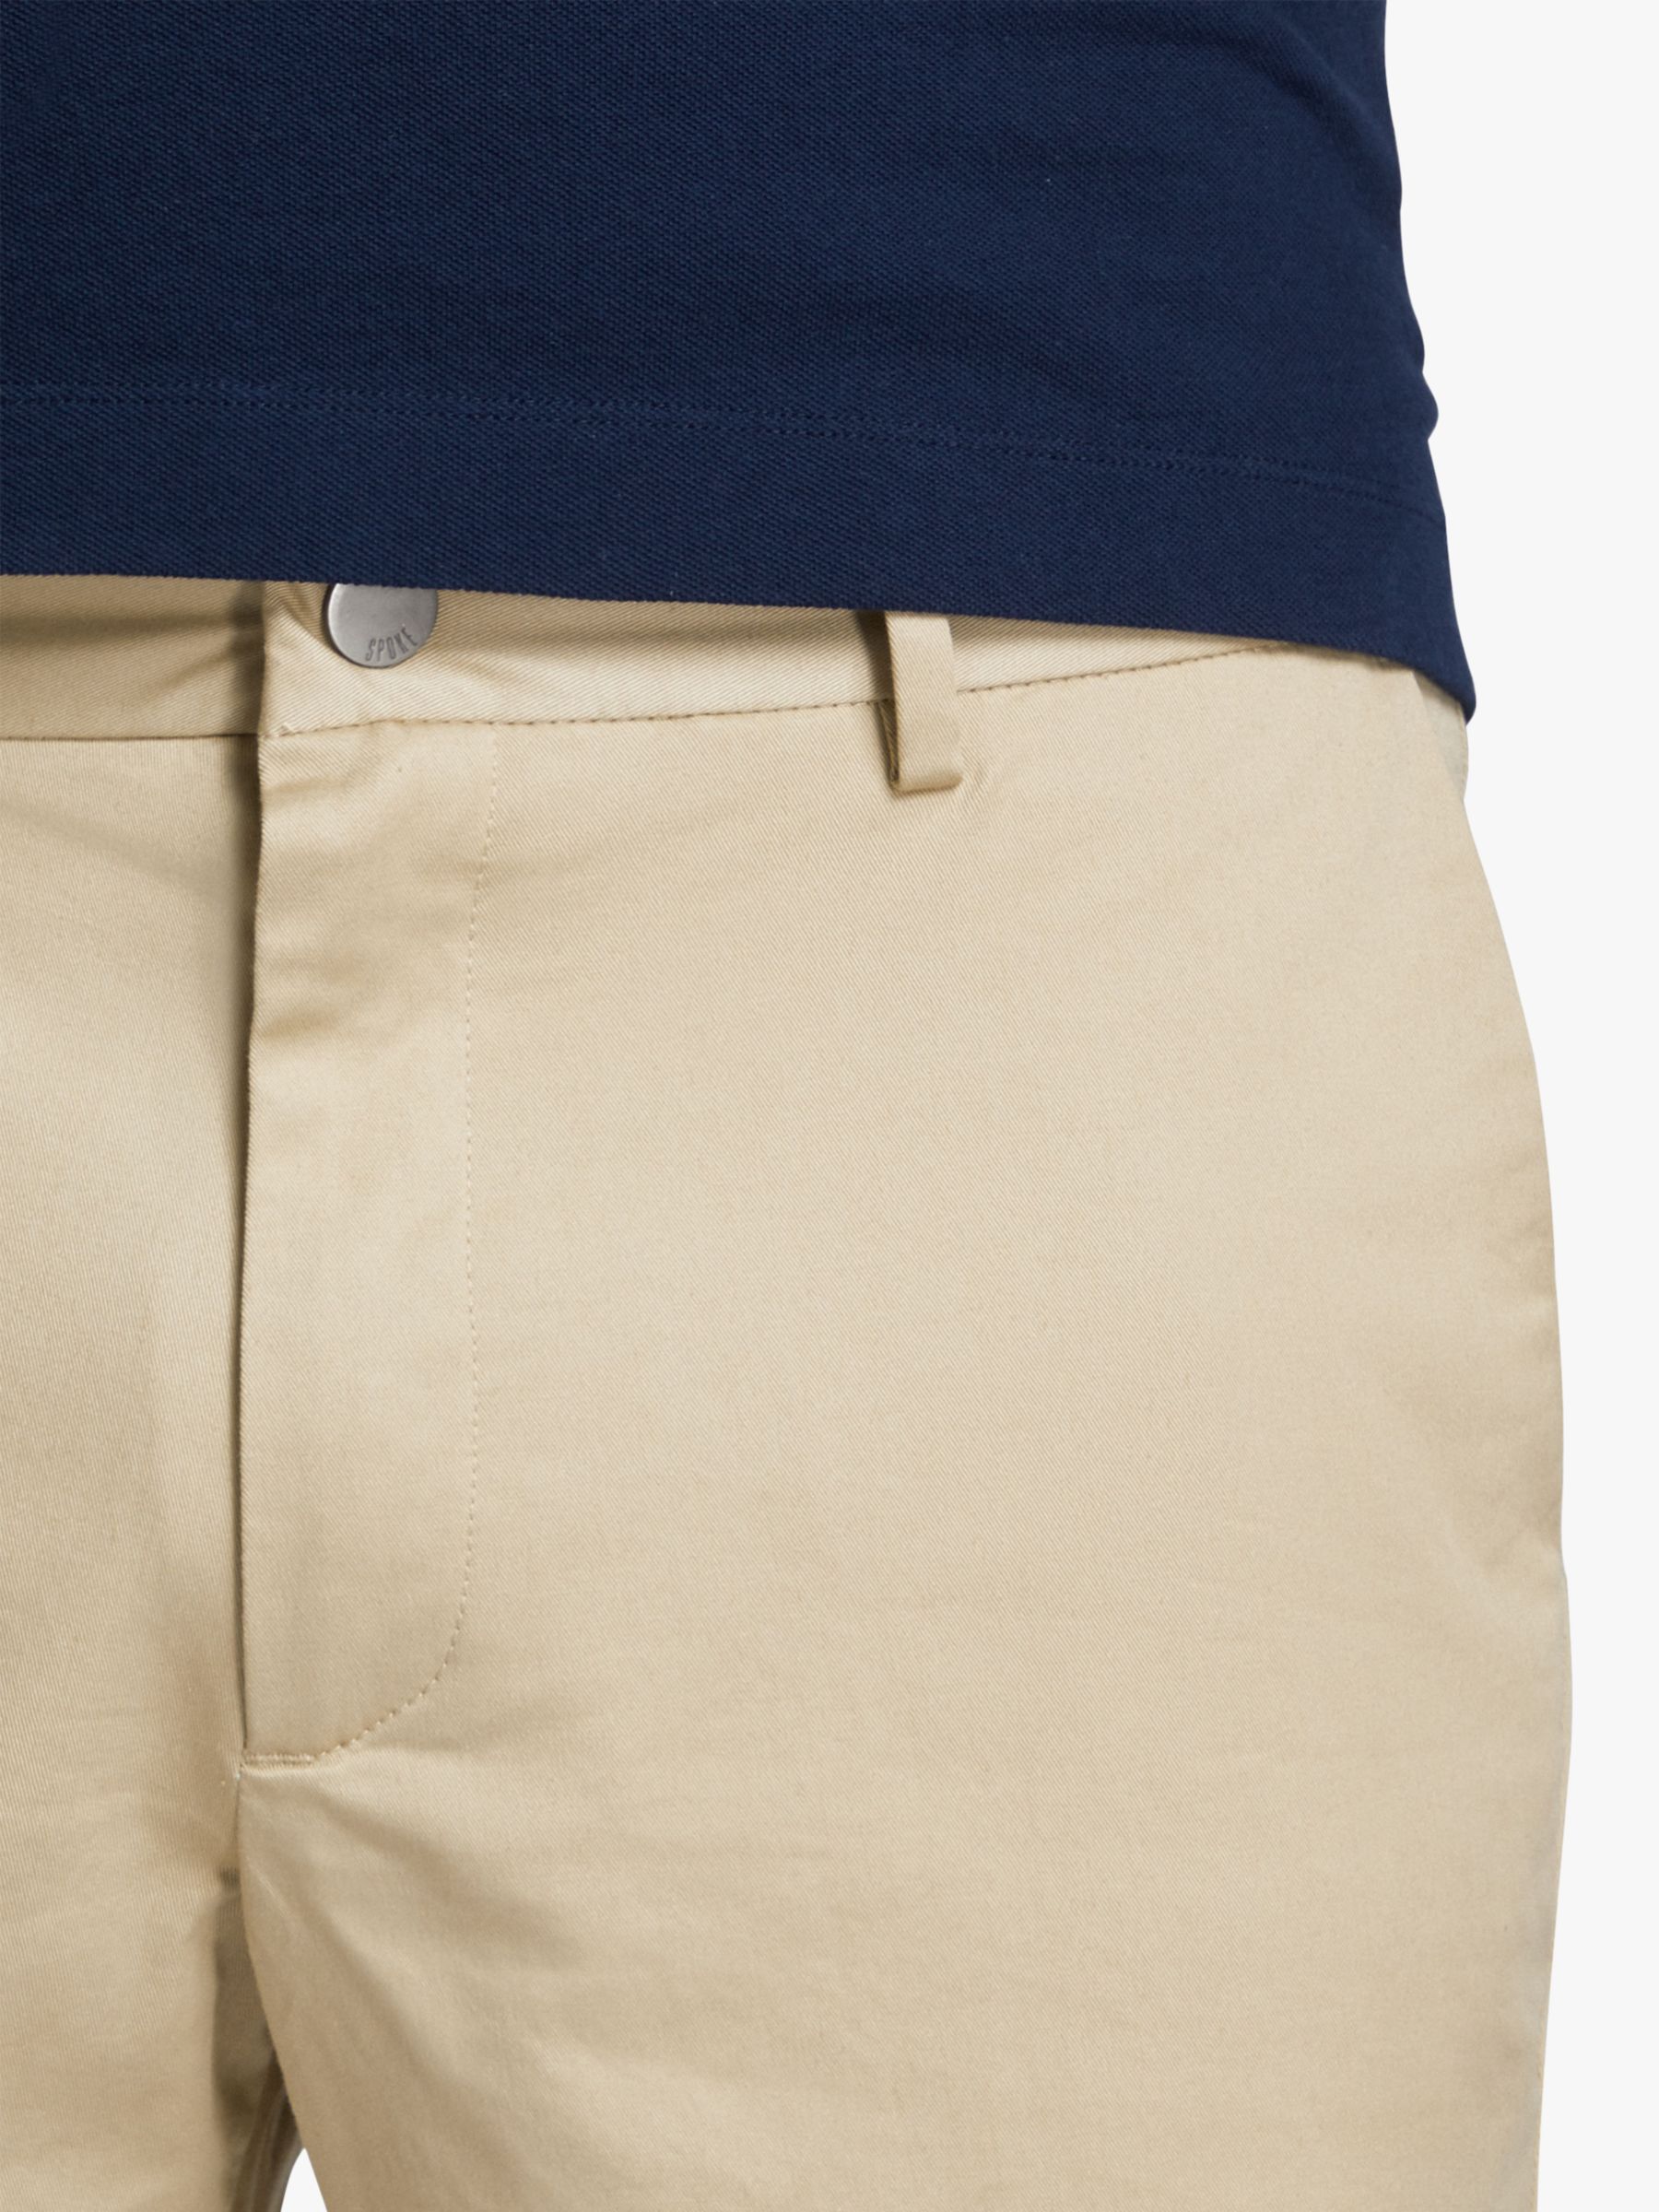 SPOKE Sharps Cotton Blend Broad Thigh Shorts, Khaki, 28L